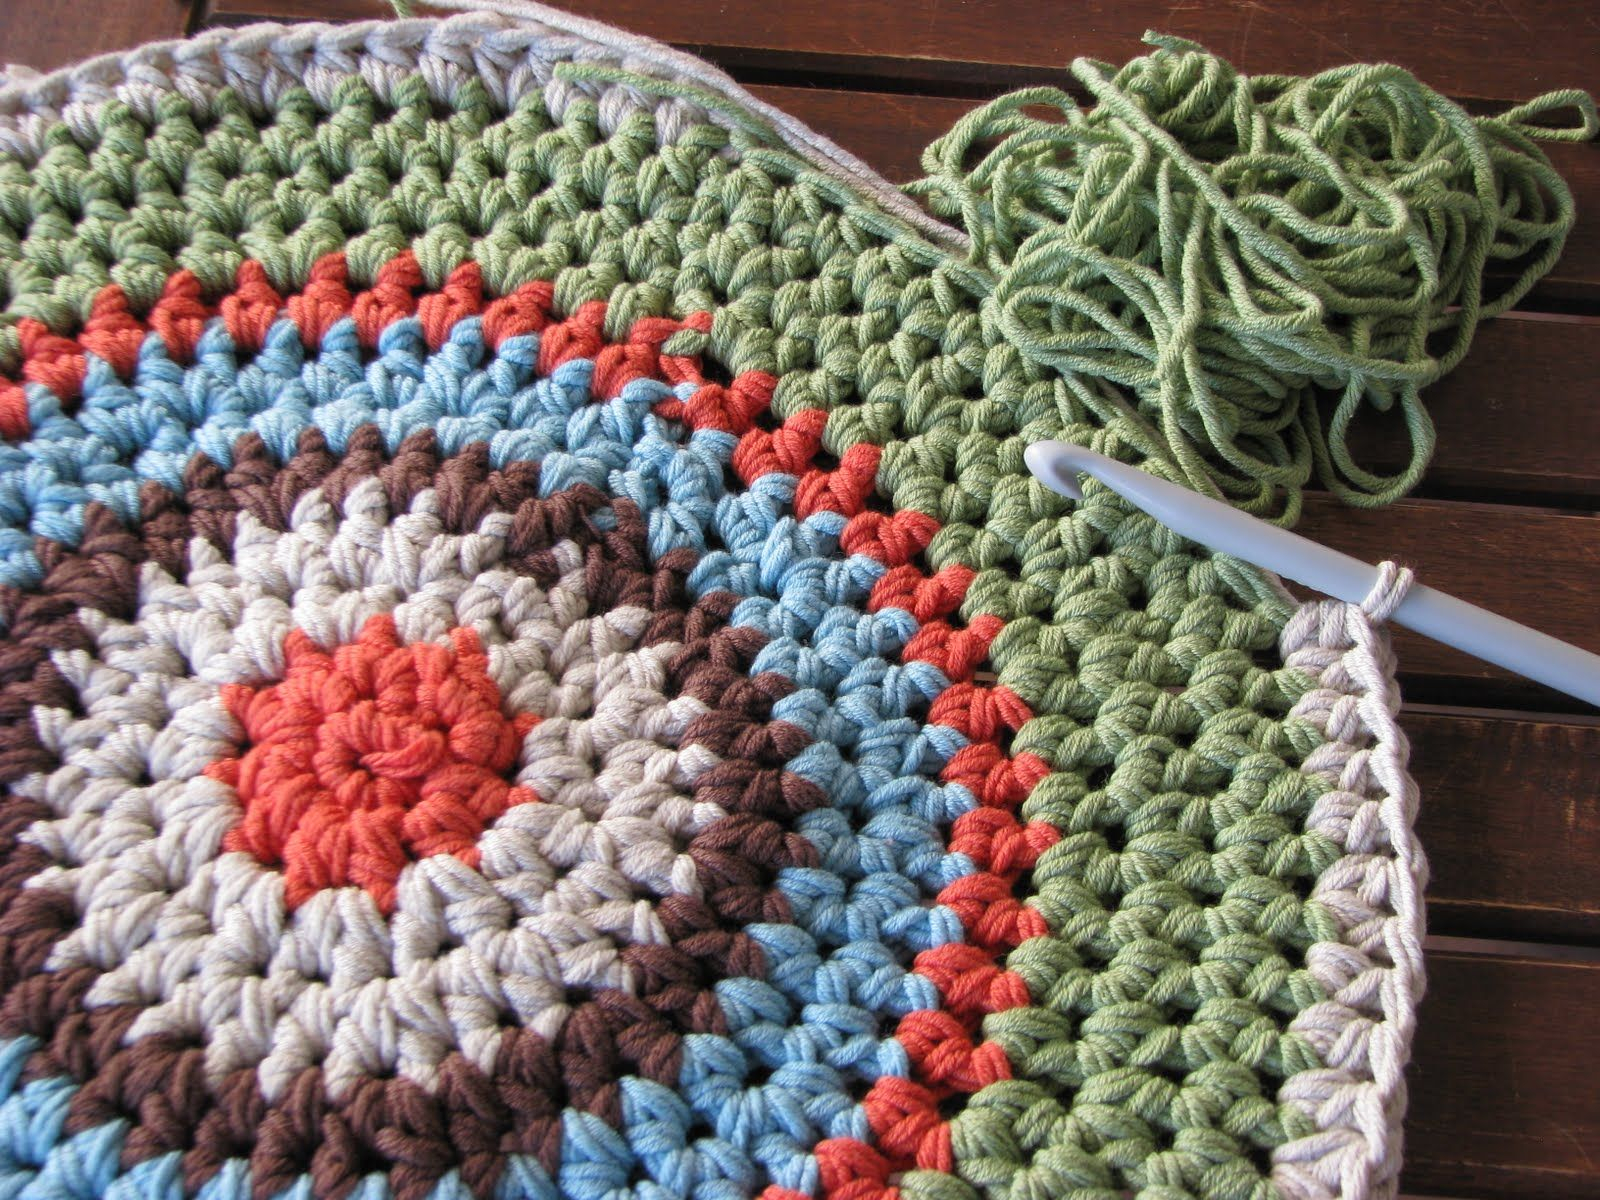 Crochet Rug Pattern Free Crocheted Rug Patterns Crochet Rug Patterns Free Vintage